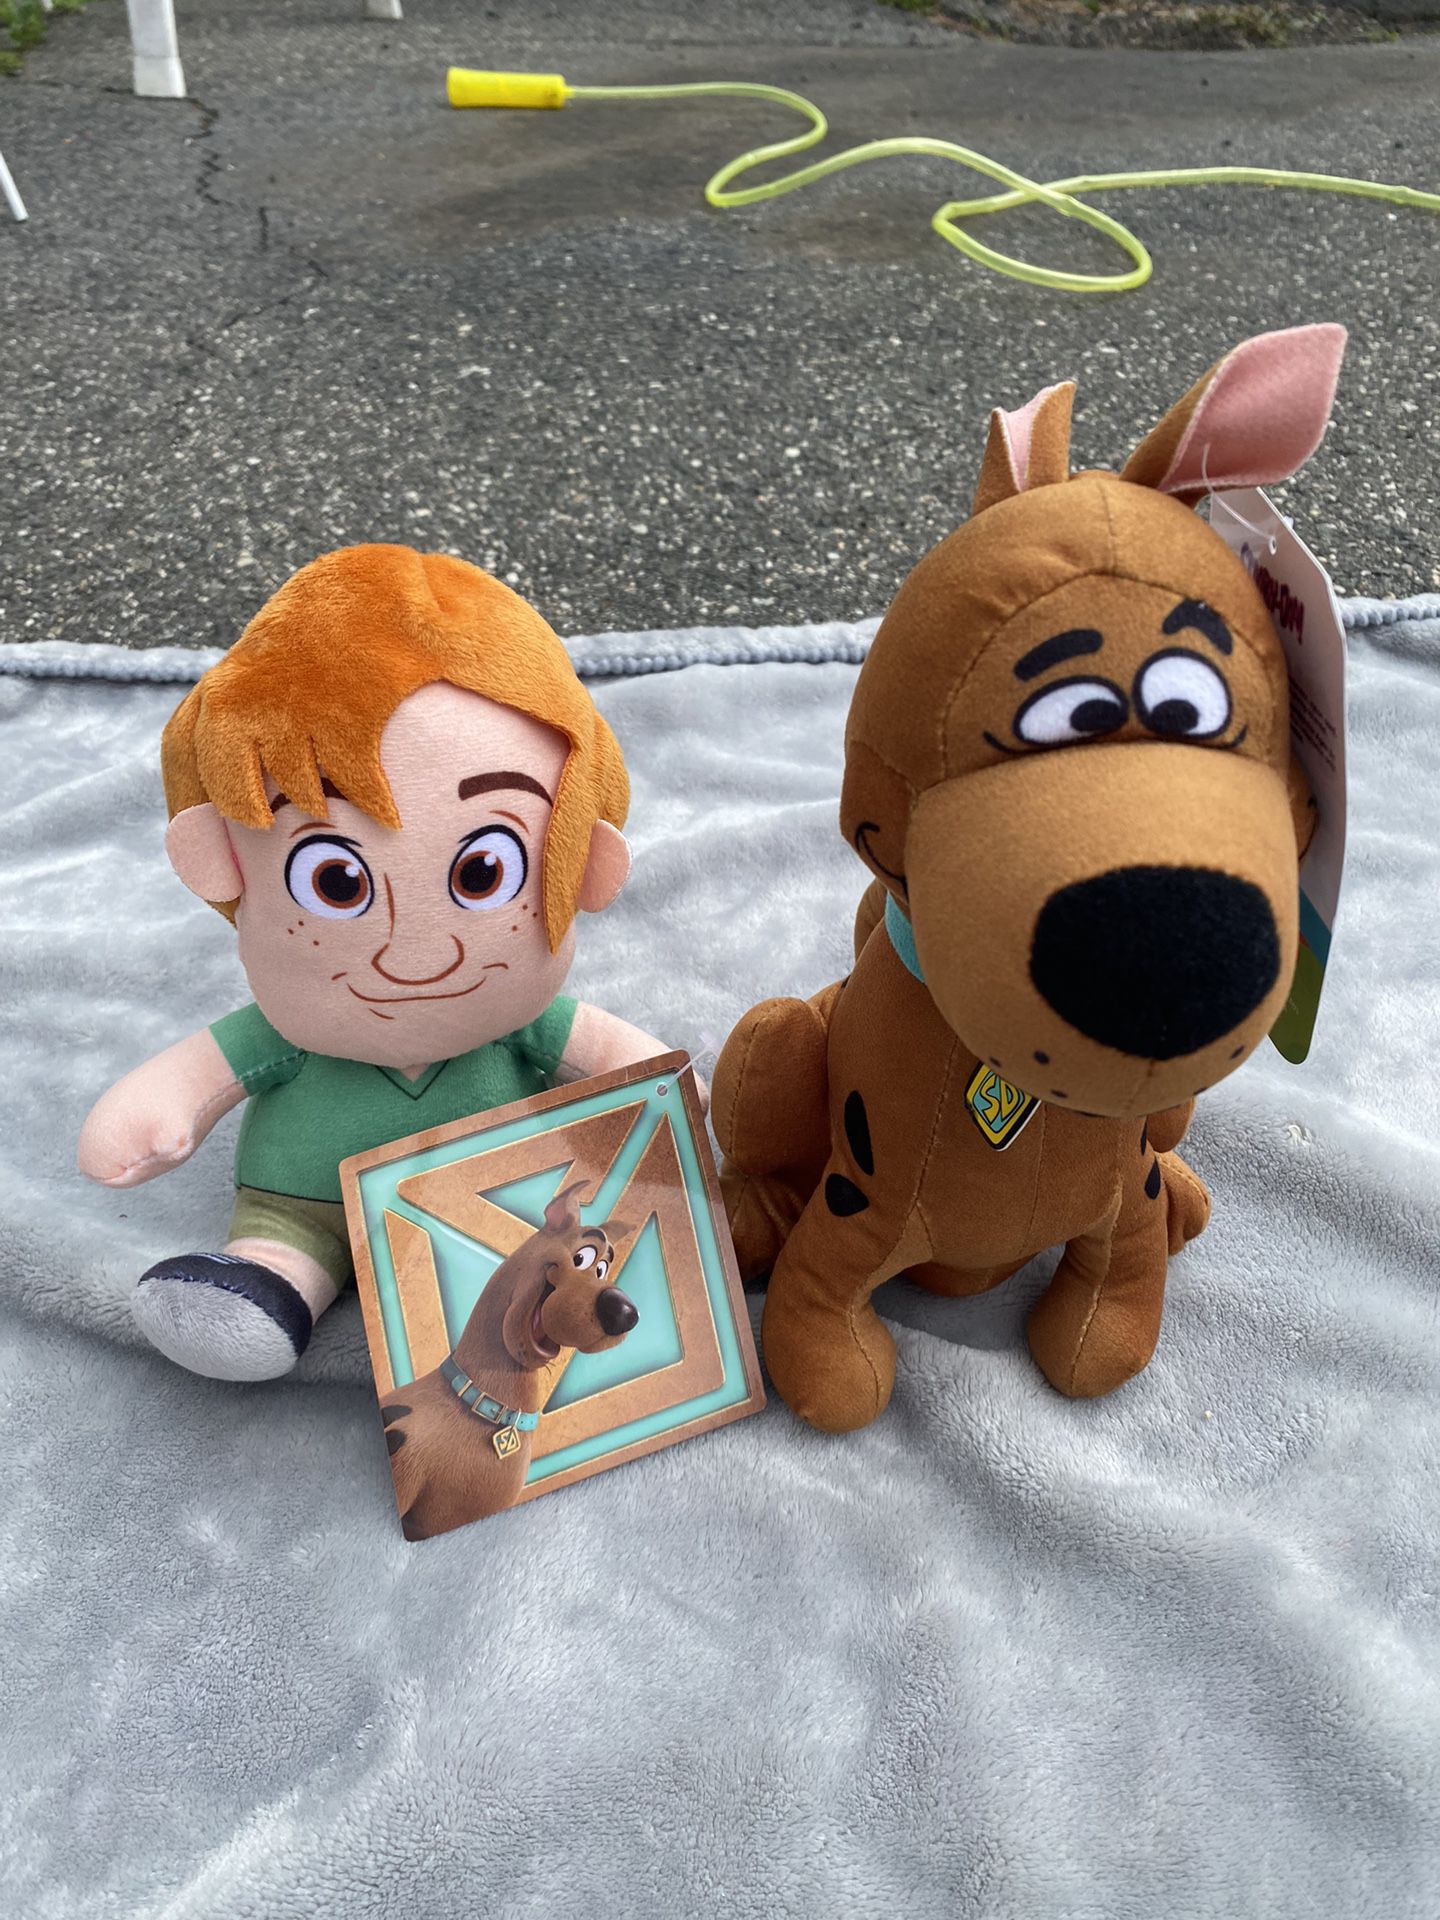 New Scooby Doo Shaggy Rogers Plush Stuffed Animal Toy 7" Cartoon Scoob! Movie